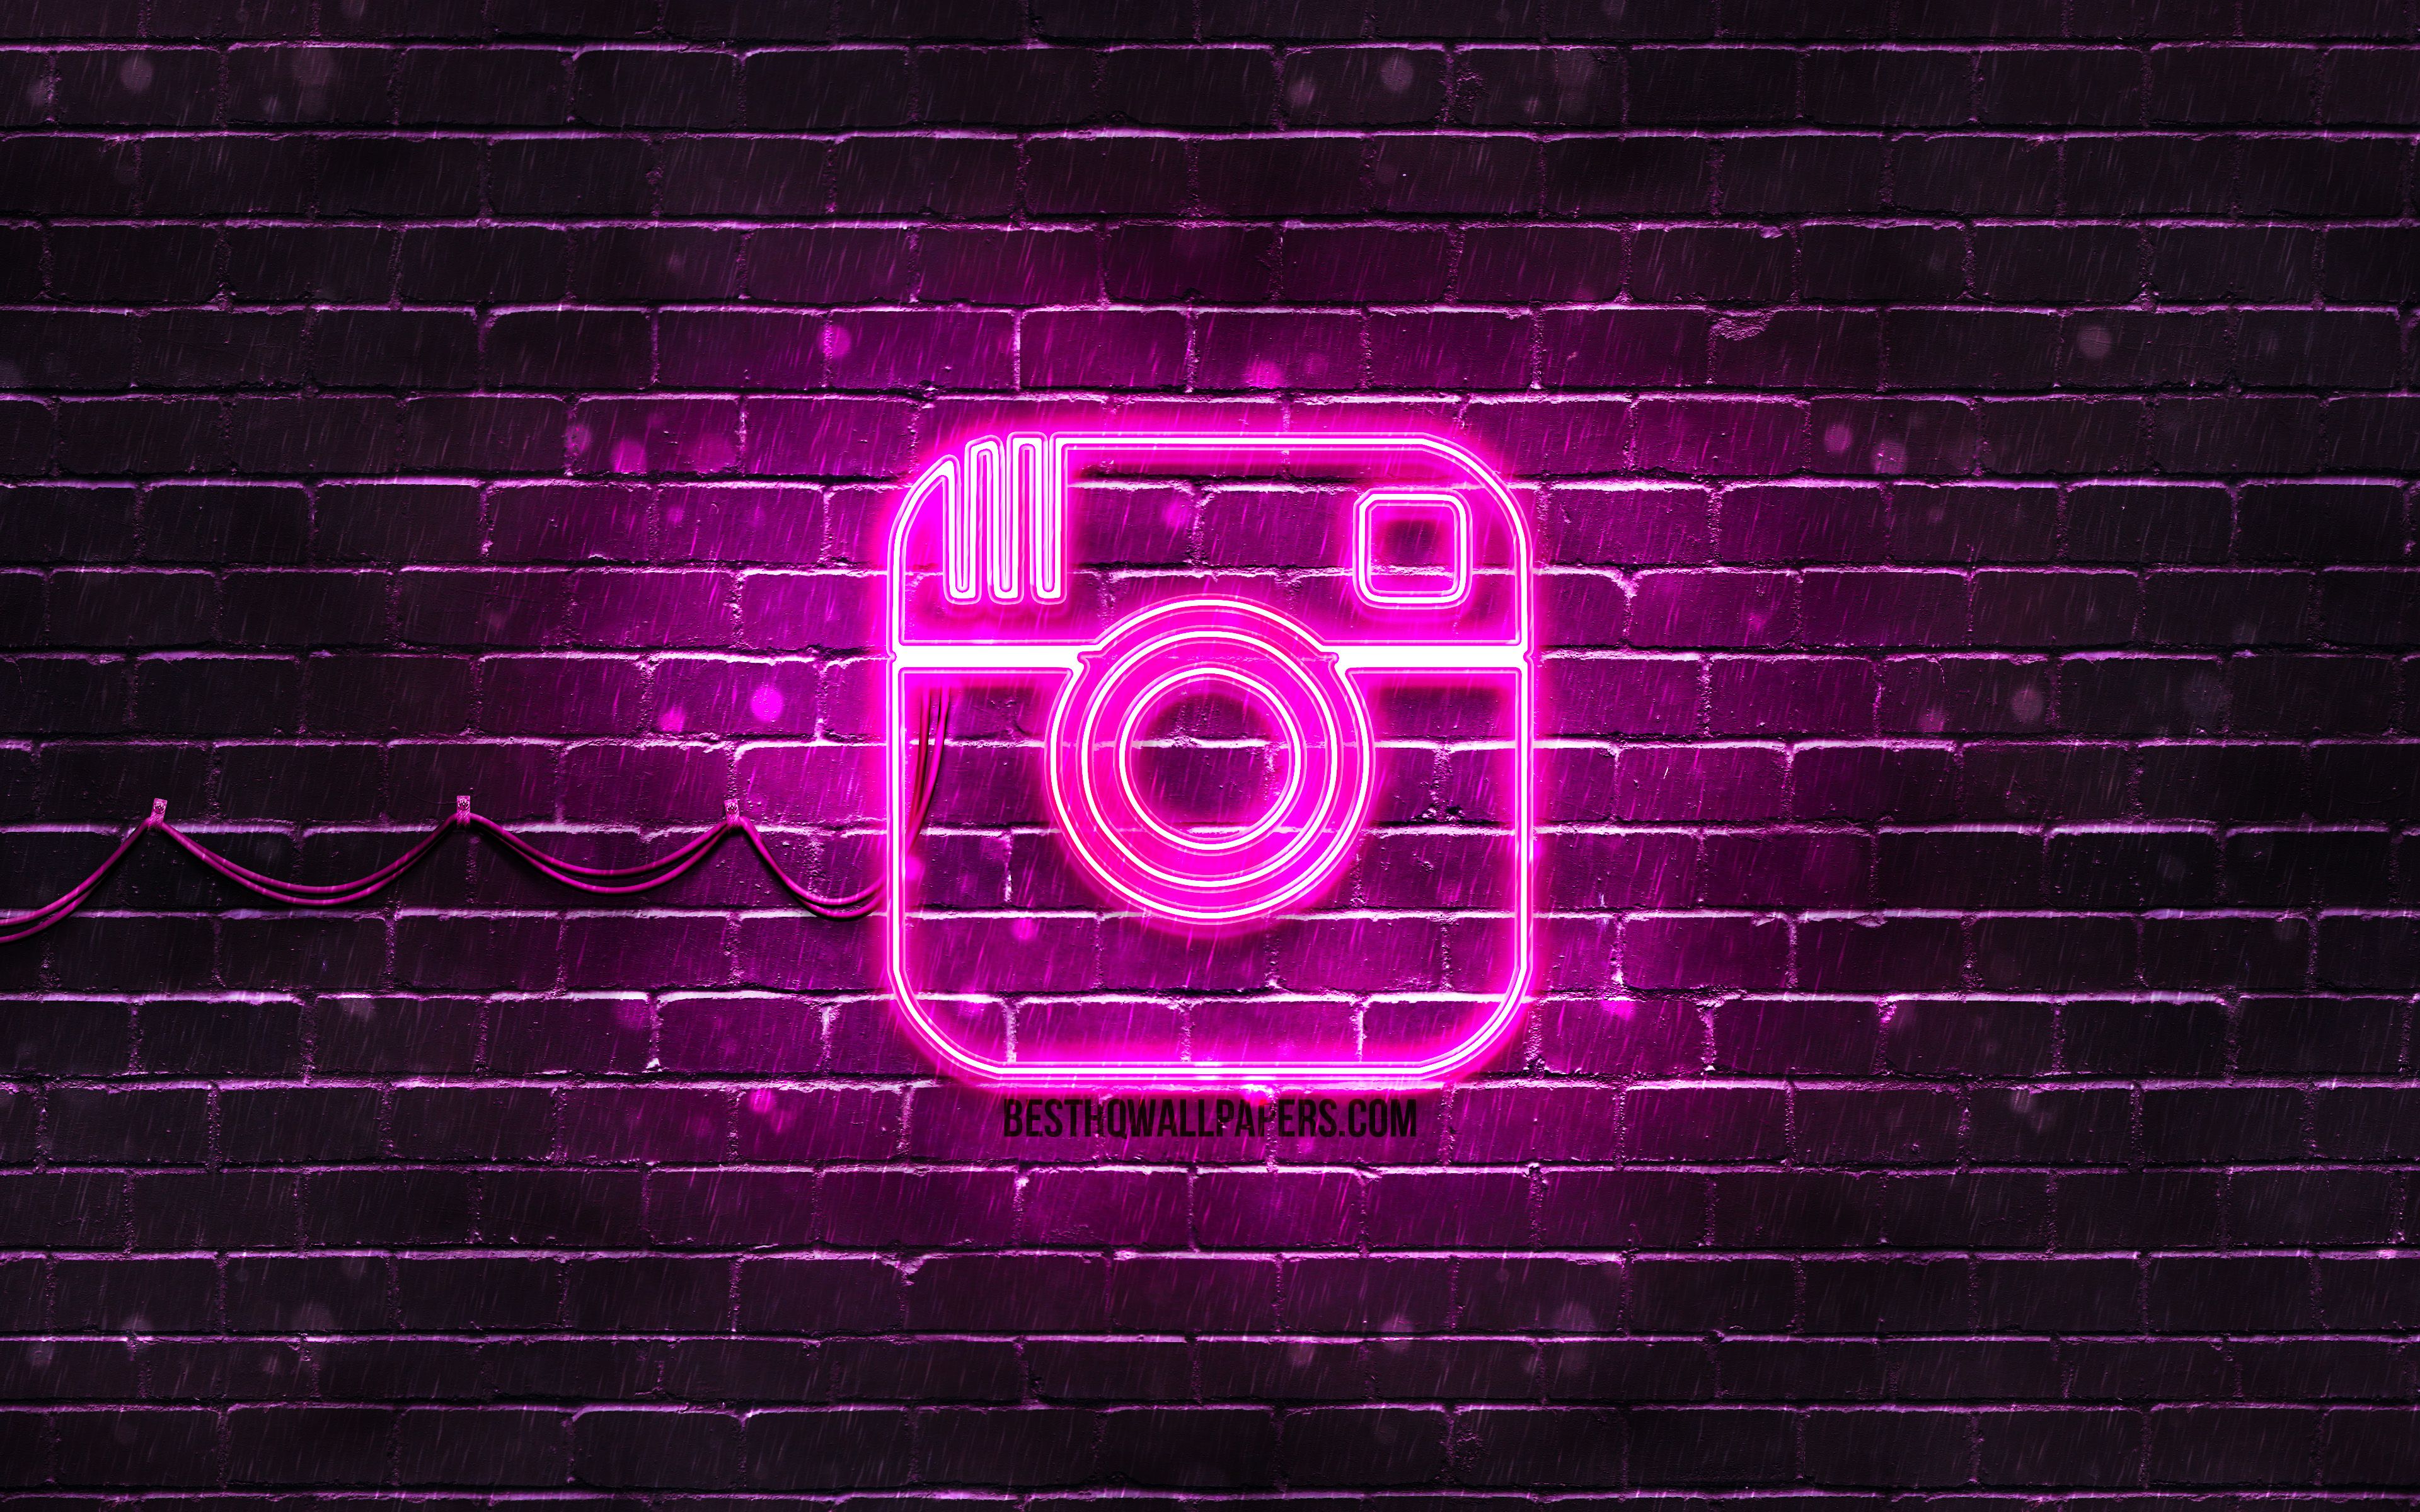 Download wallpaper Instagram purple logo, 4k, purple brickwall, Instagram logo, brands, Instagram neon logo, Instagram for desktop with resolution 3840x2400. High Quality HD picture wallpaper